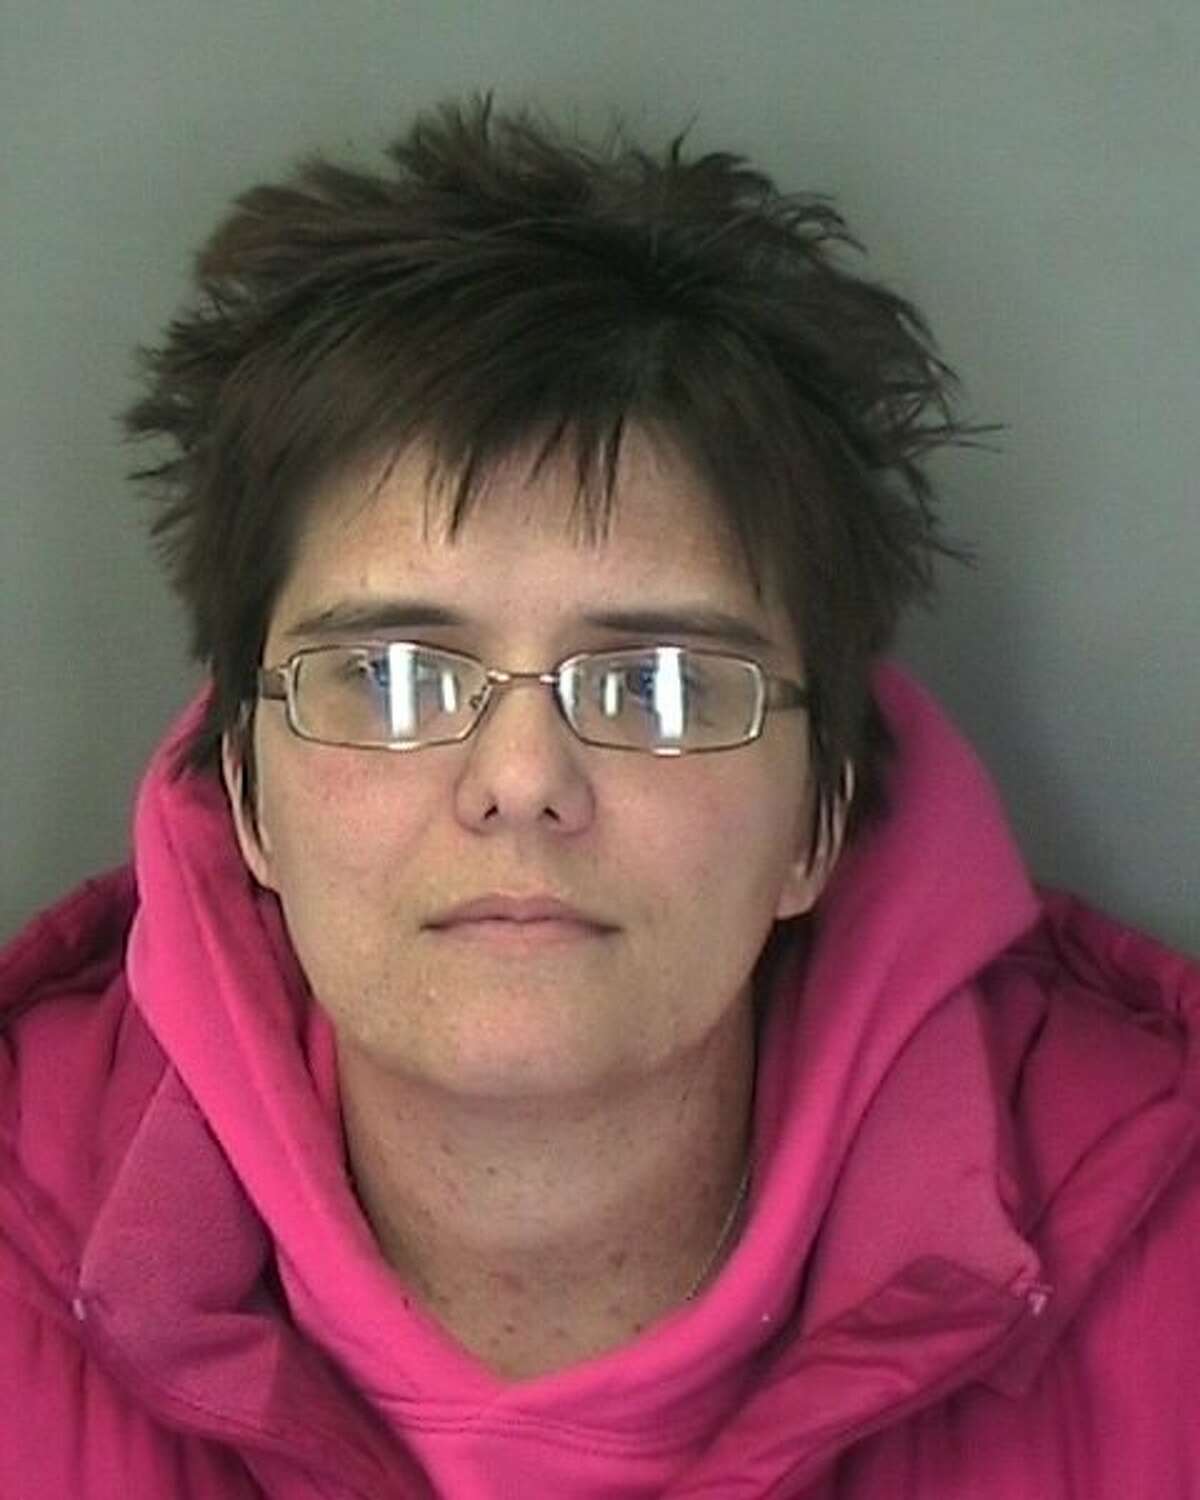 Angela Ramsey is accused of welfare fraud. (Warren County sheriff's department photo)